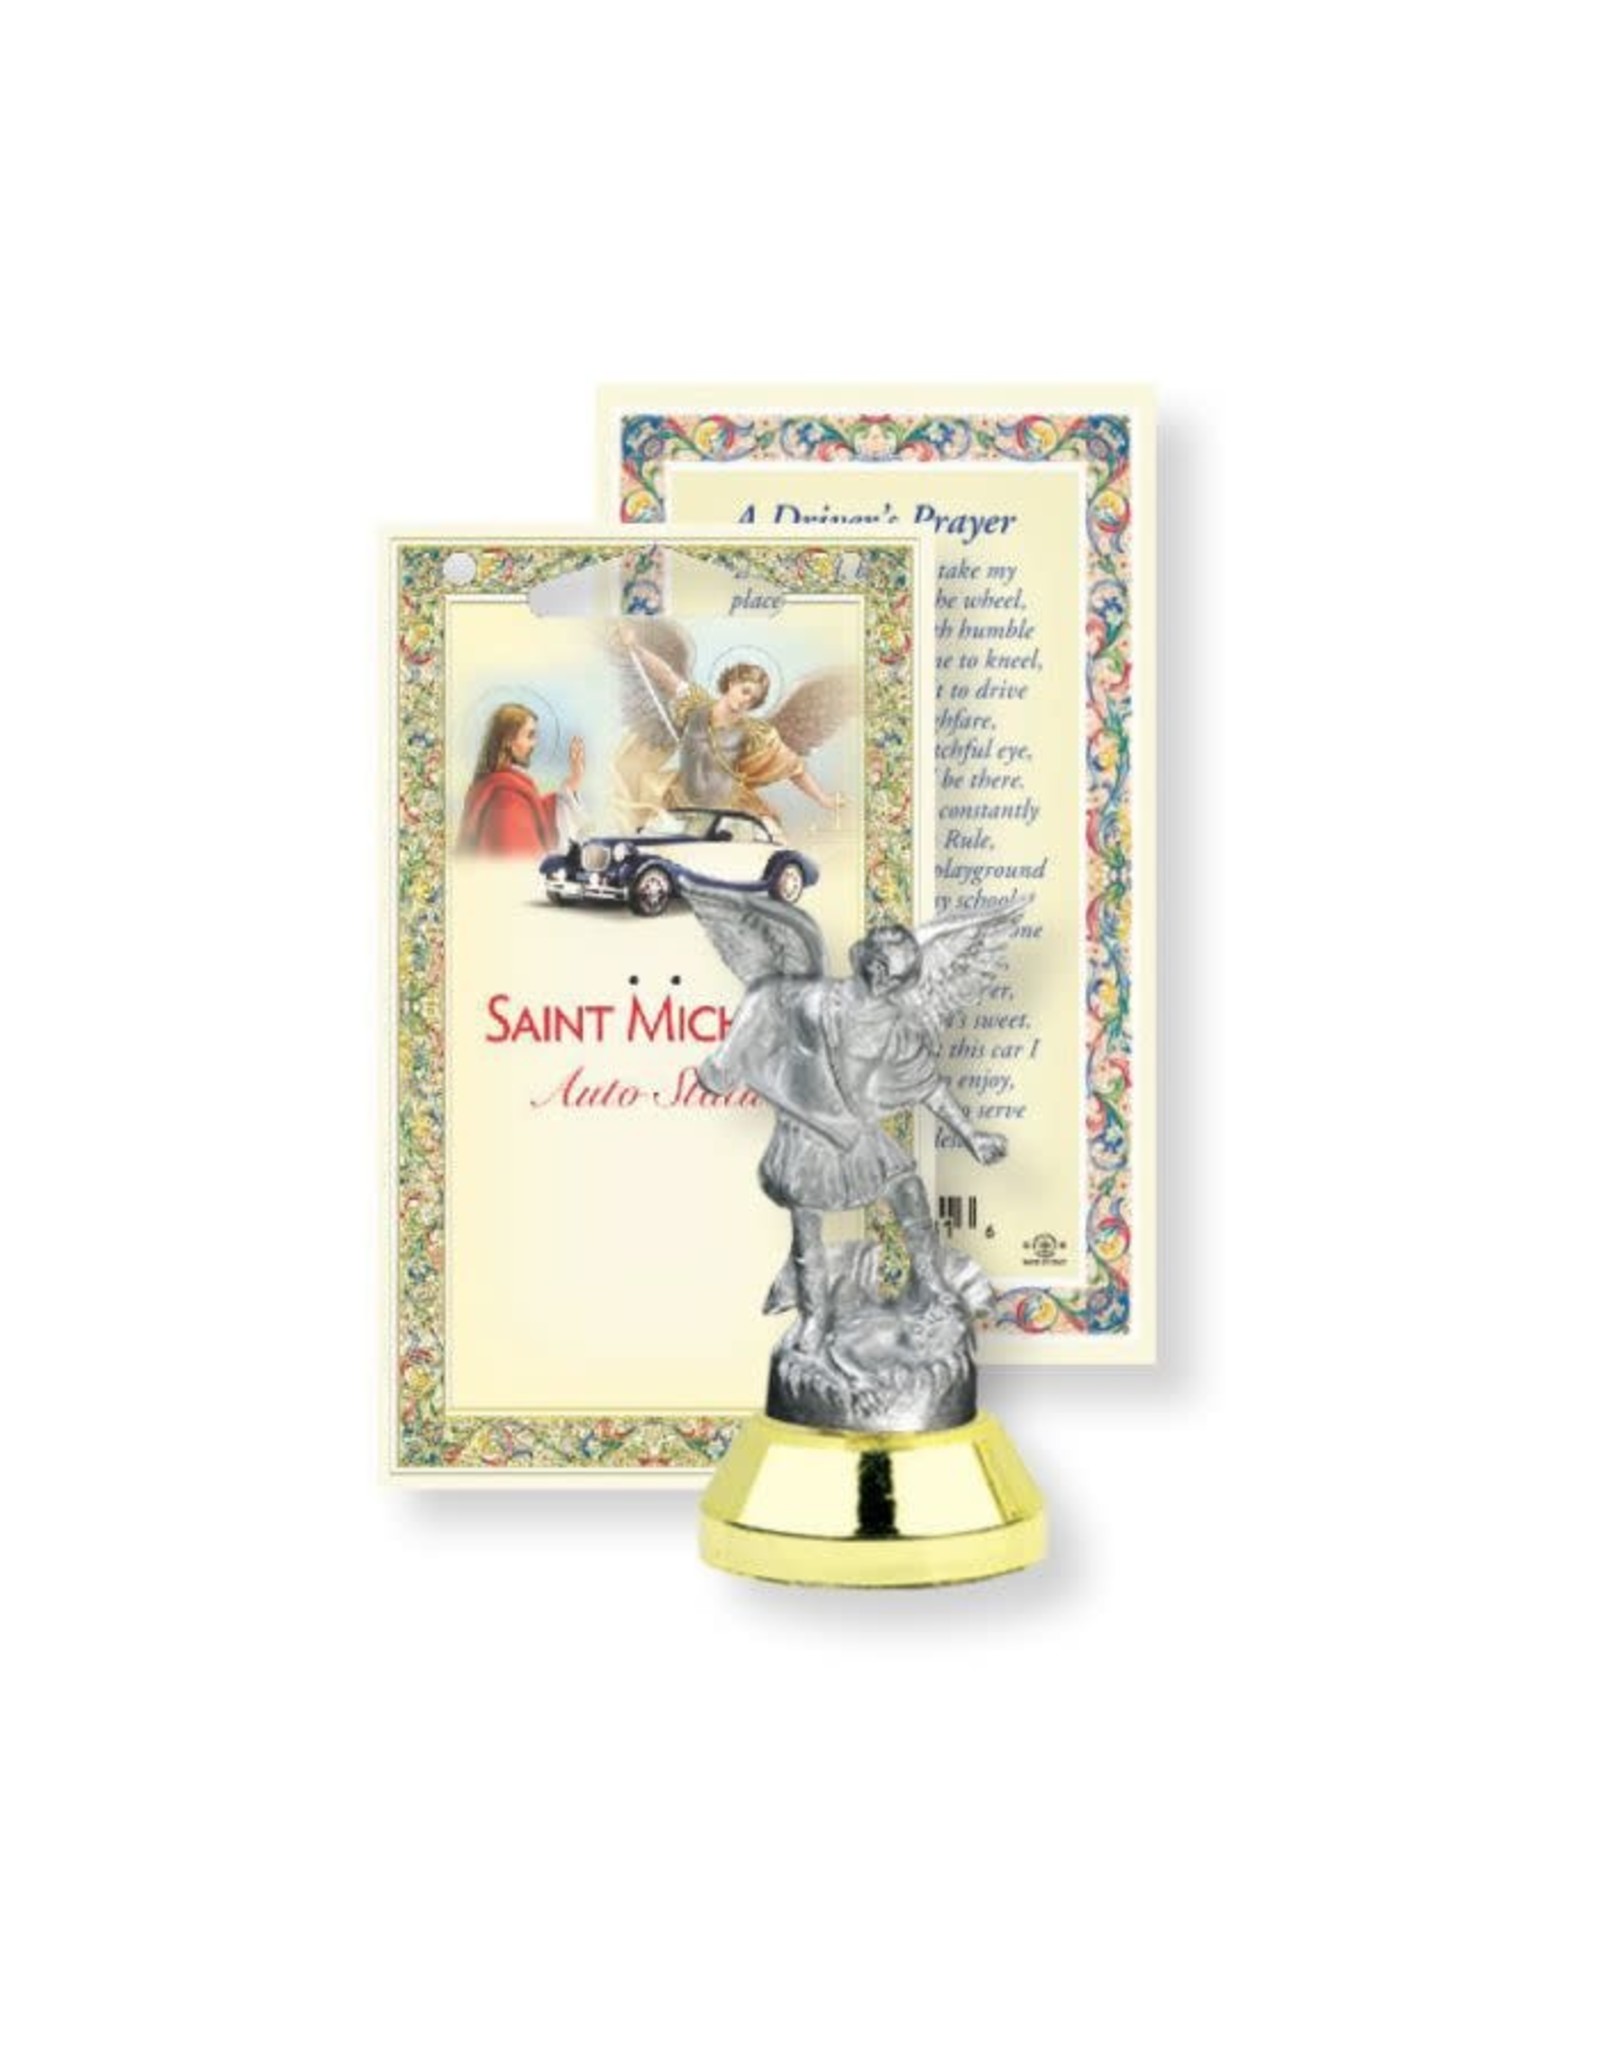 Hirten St. Michael Auto Statue with Prayer Card